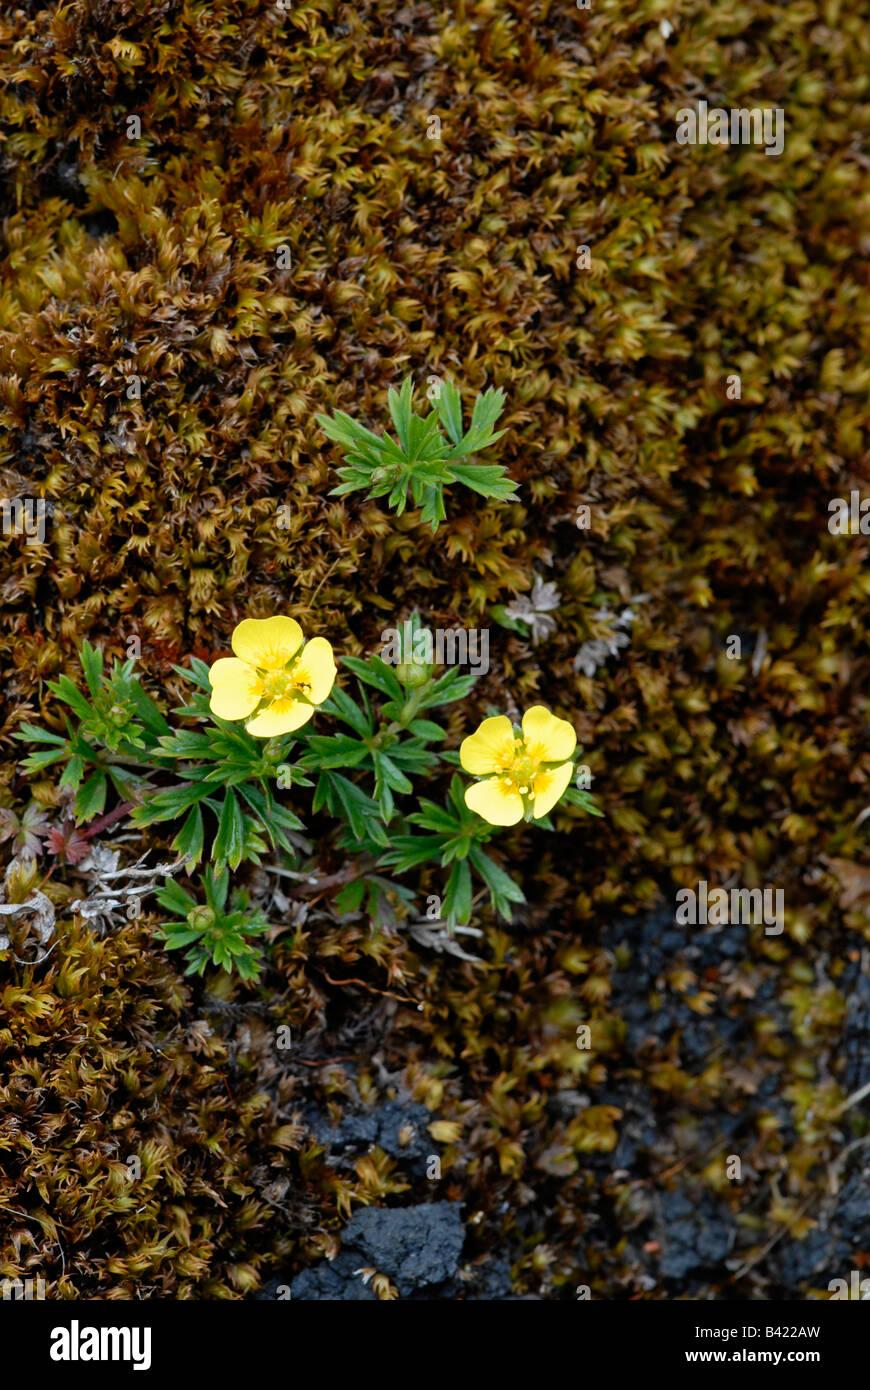 tormentil-potentilla-erecta-growing-amongst-moss-on-moorland-may-B422AW.jpg